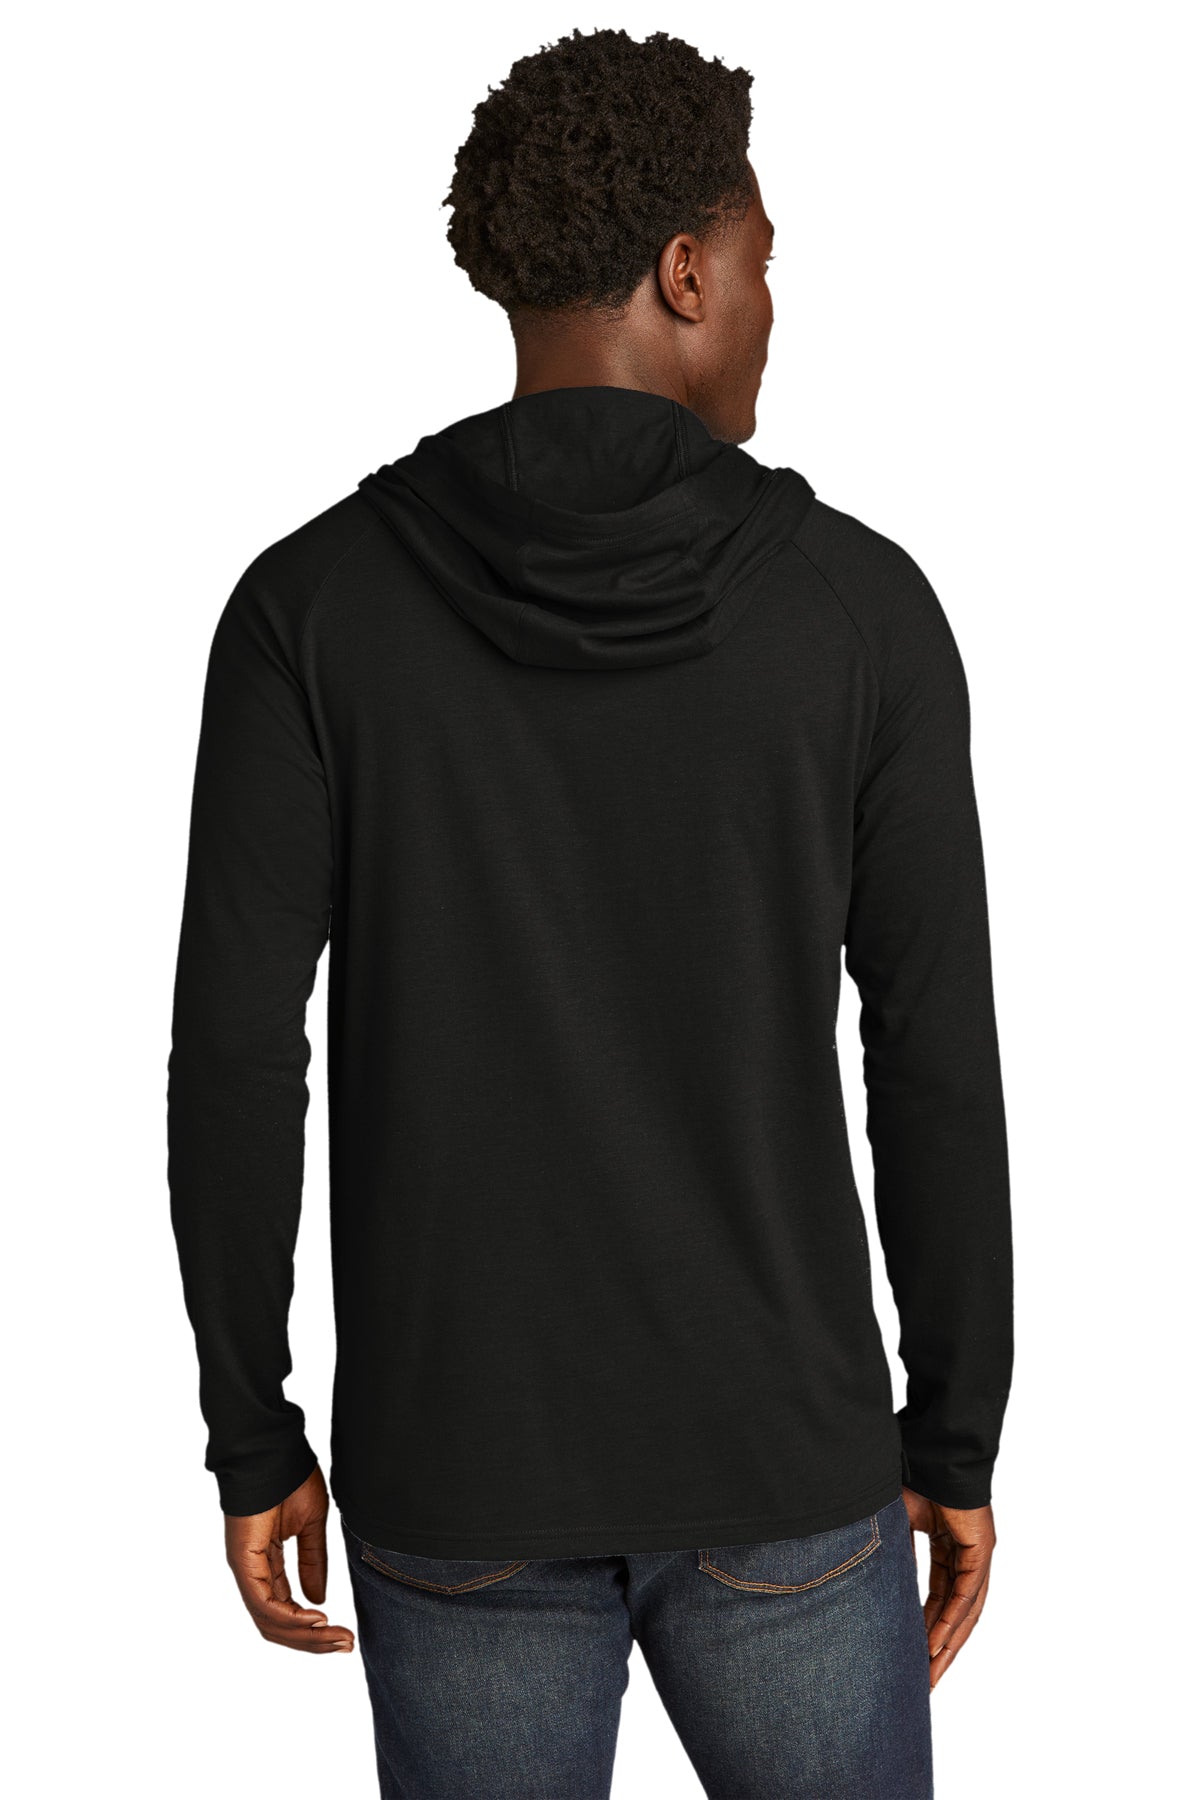 New Era Tri-Blend Custom Hoodies, Black Solid